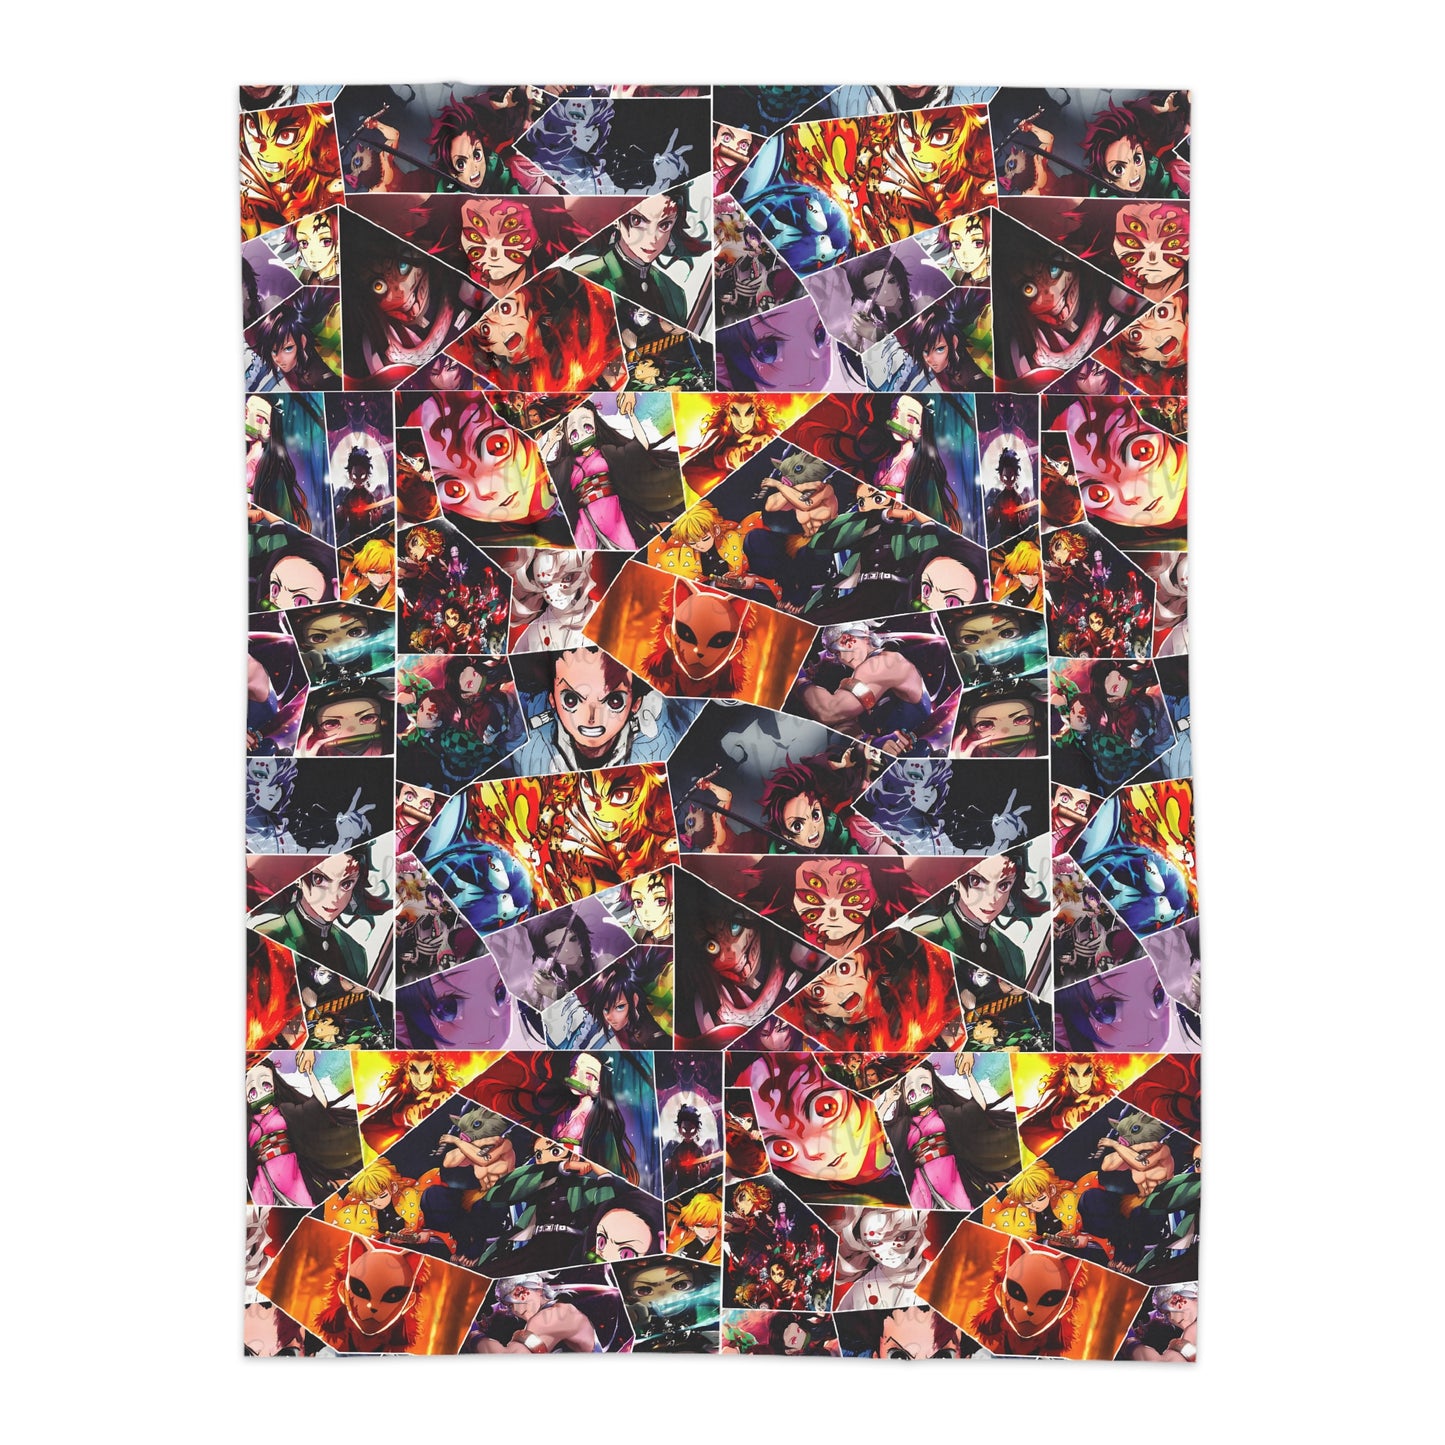 Demon Slayer Reflections Collage Sherpa Blanket